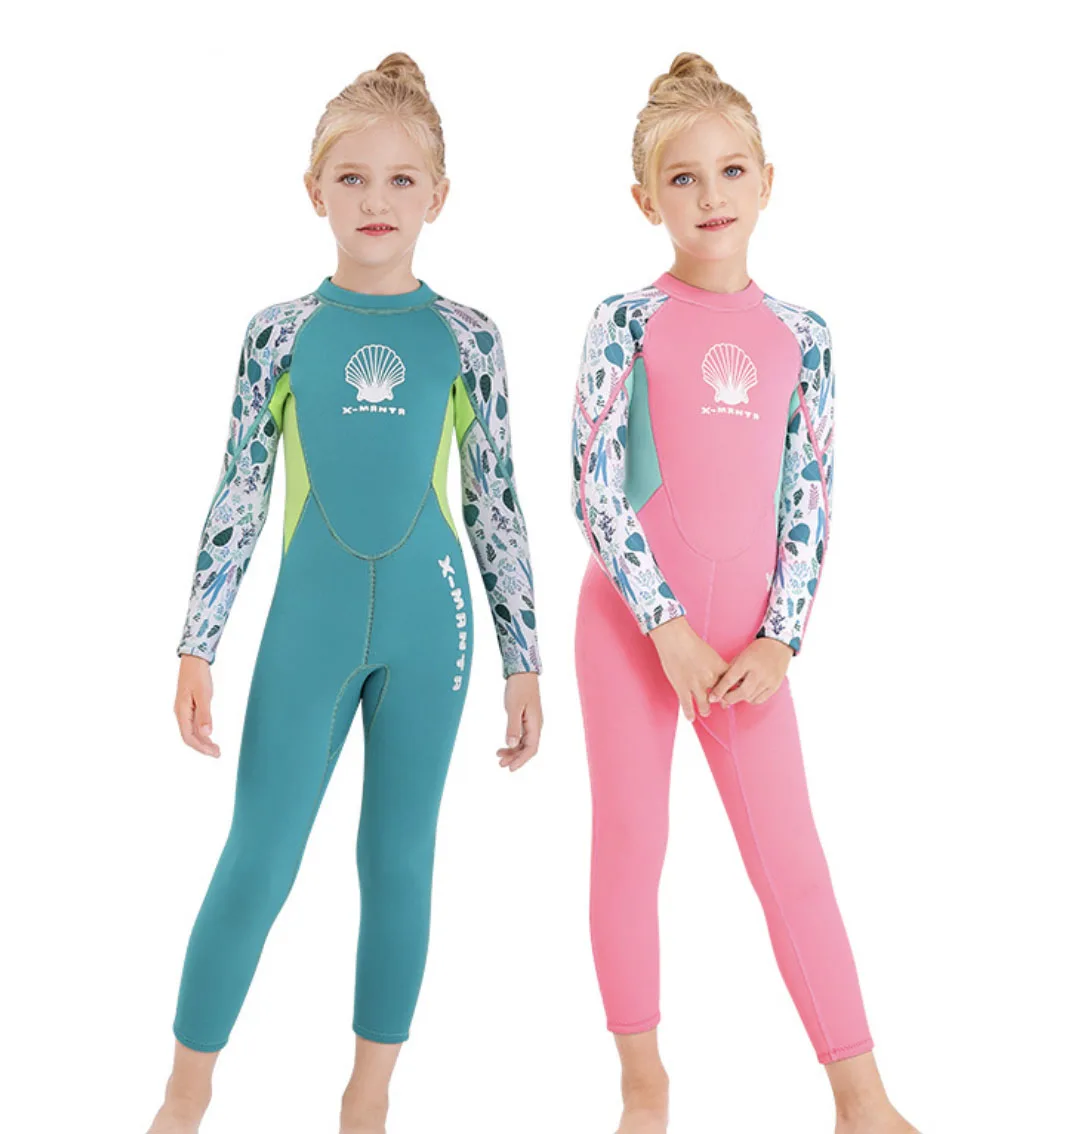 Kids Boys Girls Anti-UV Swimsuit Surf Dive Suit Swimming Costume Child Swimwear 